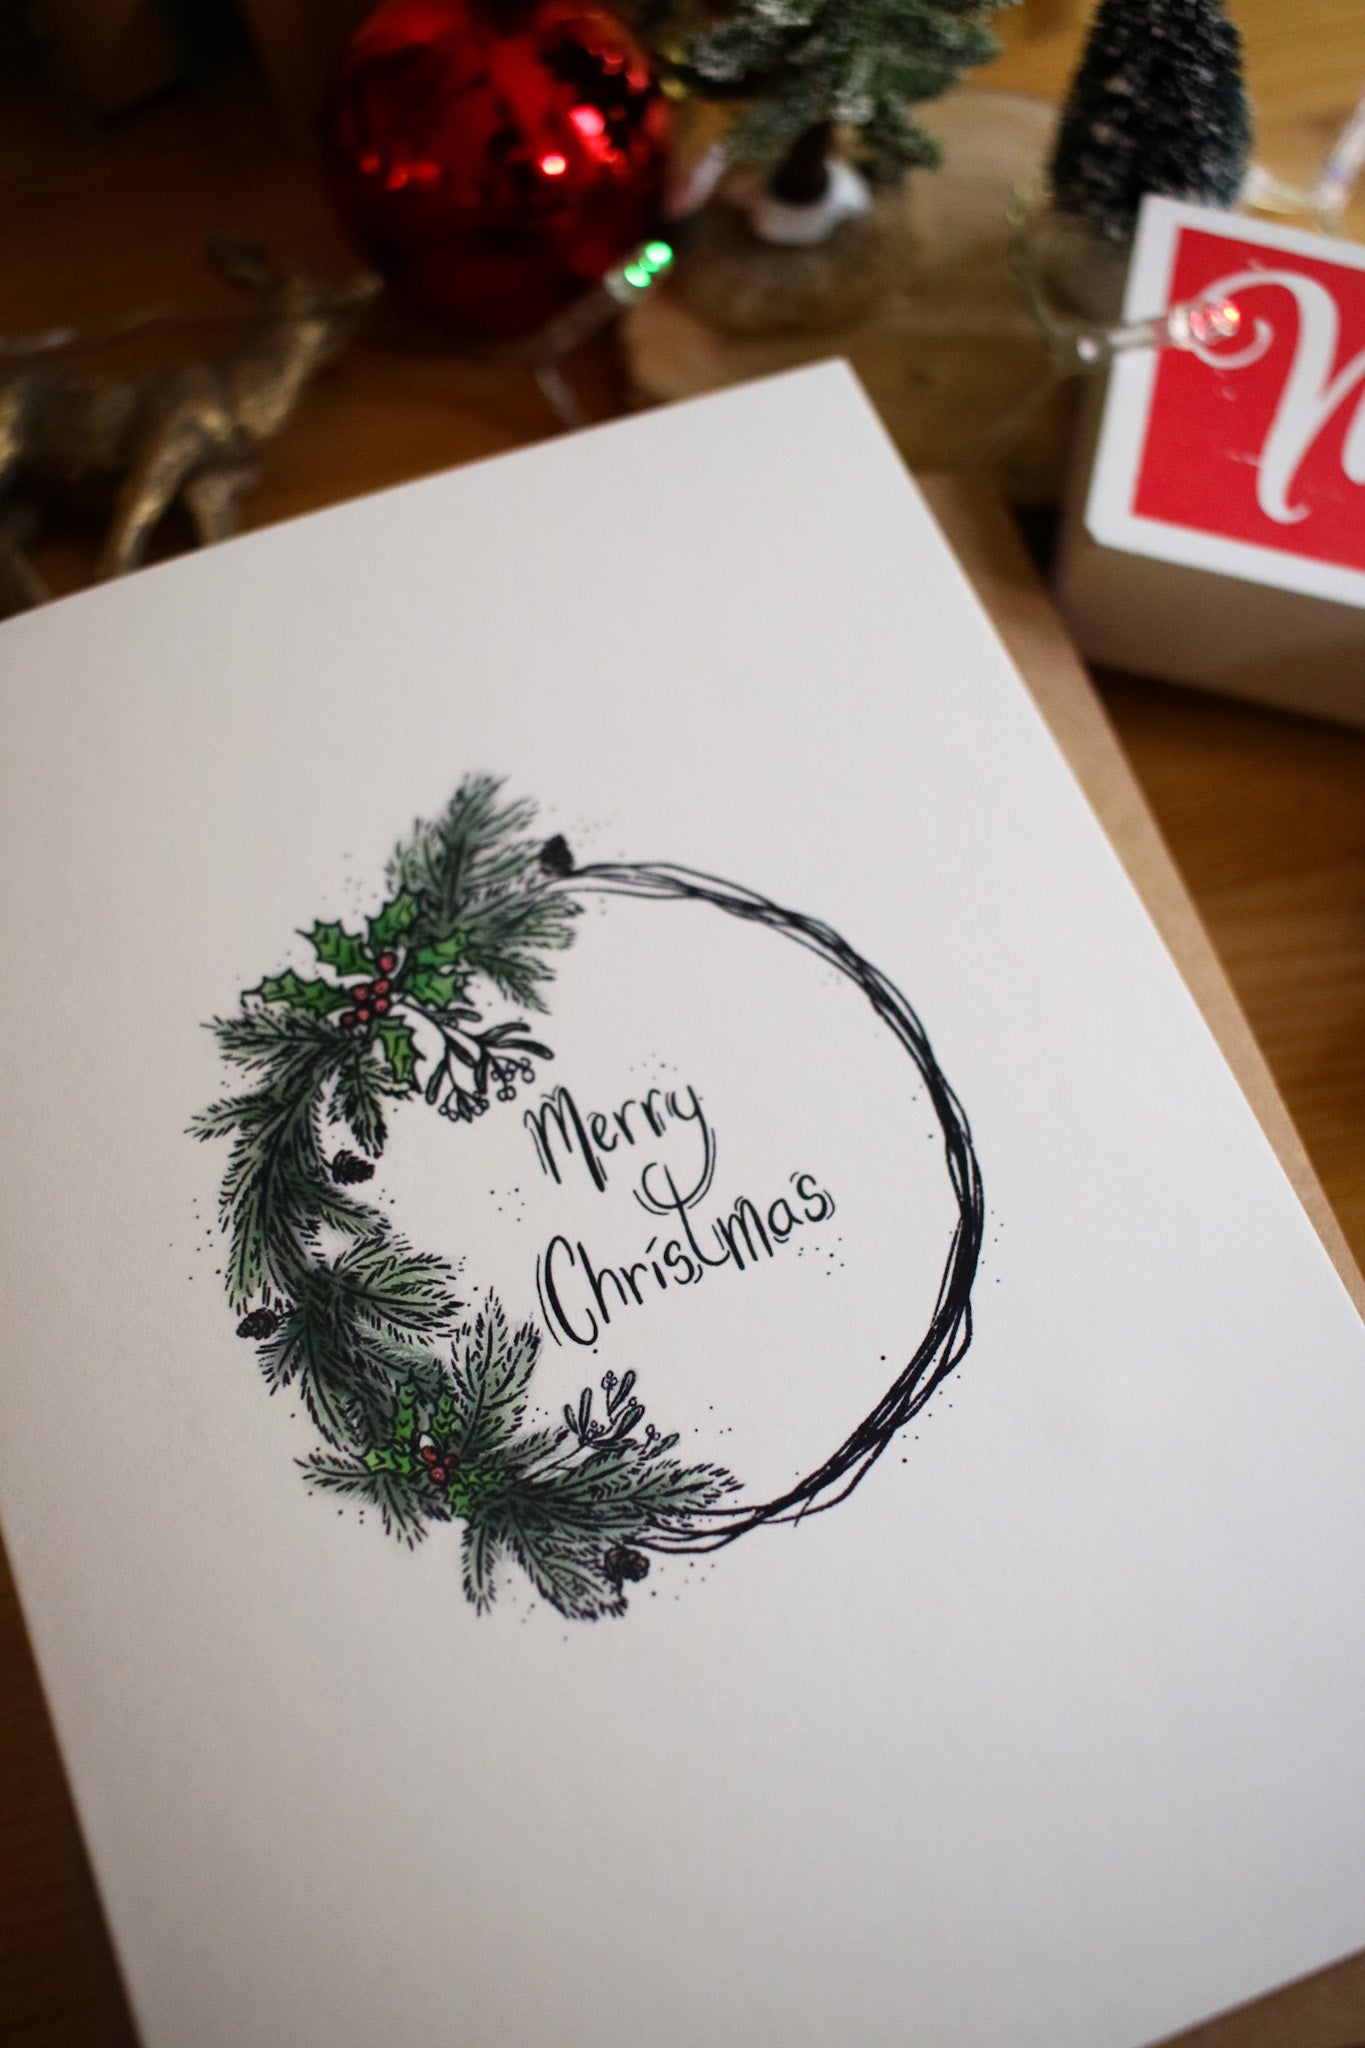 Merry Christmas - Greeting Card